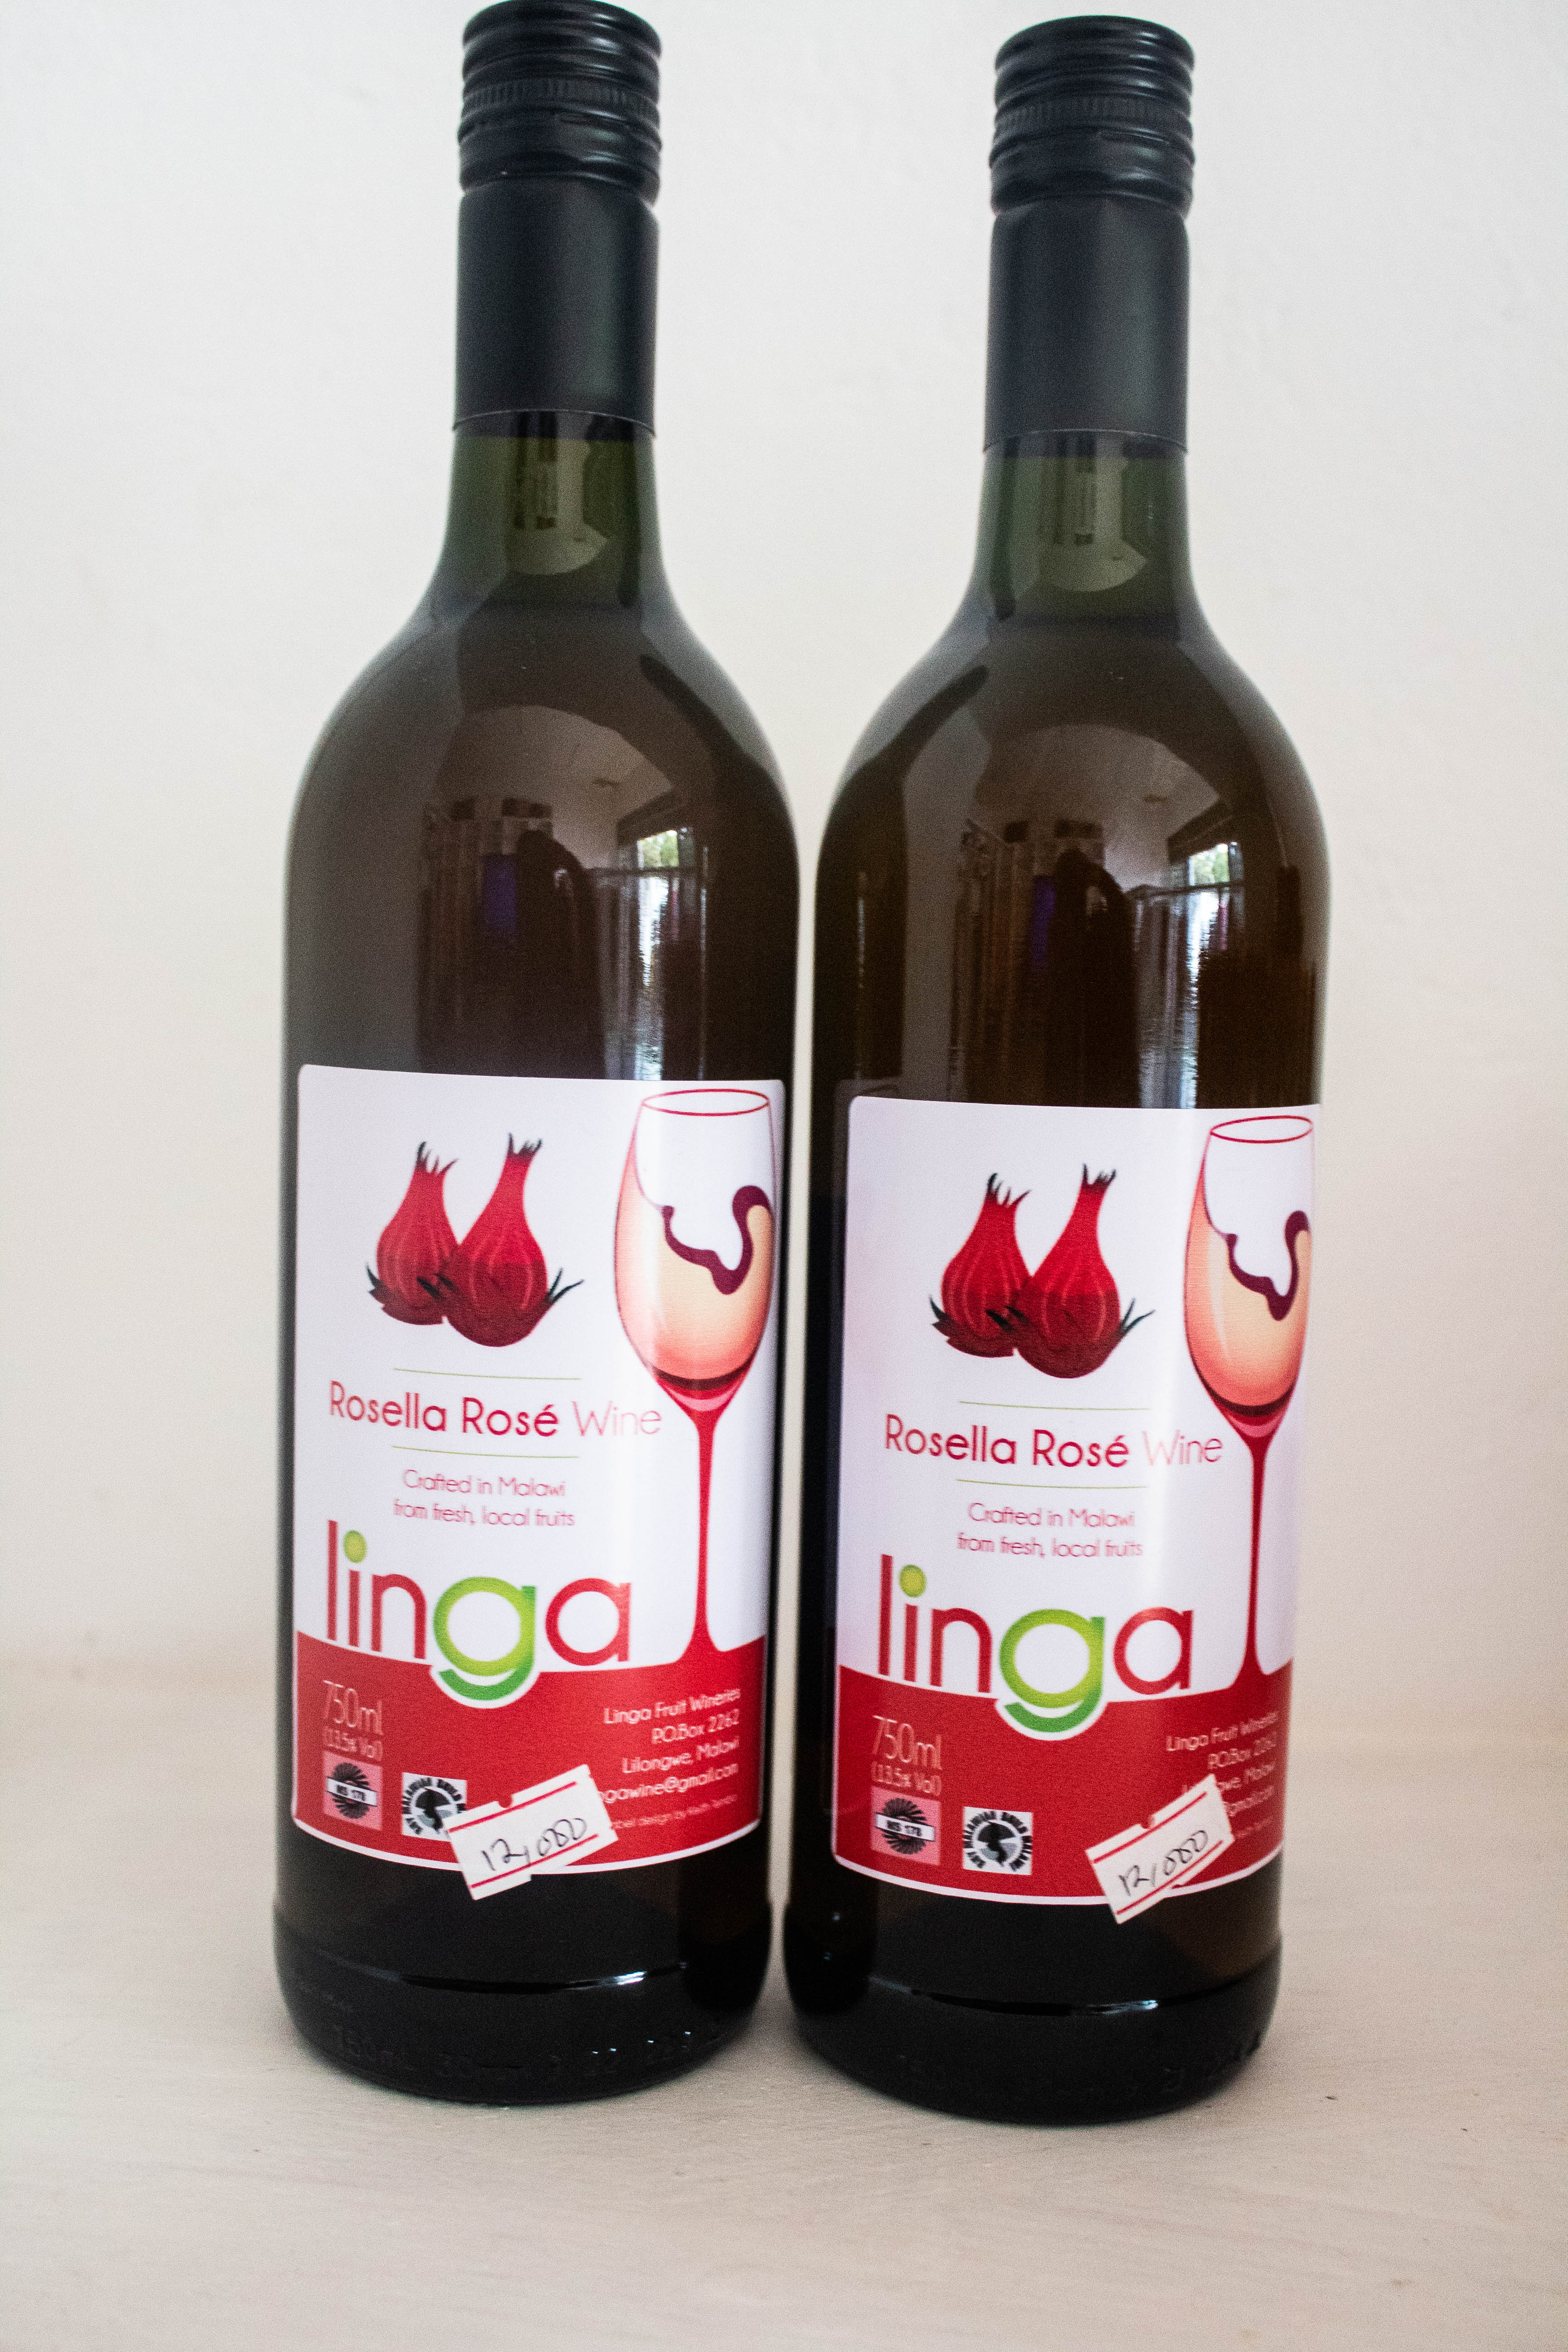 Linga-wines